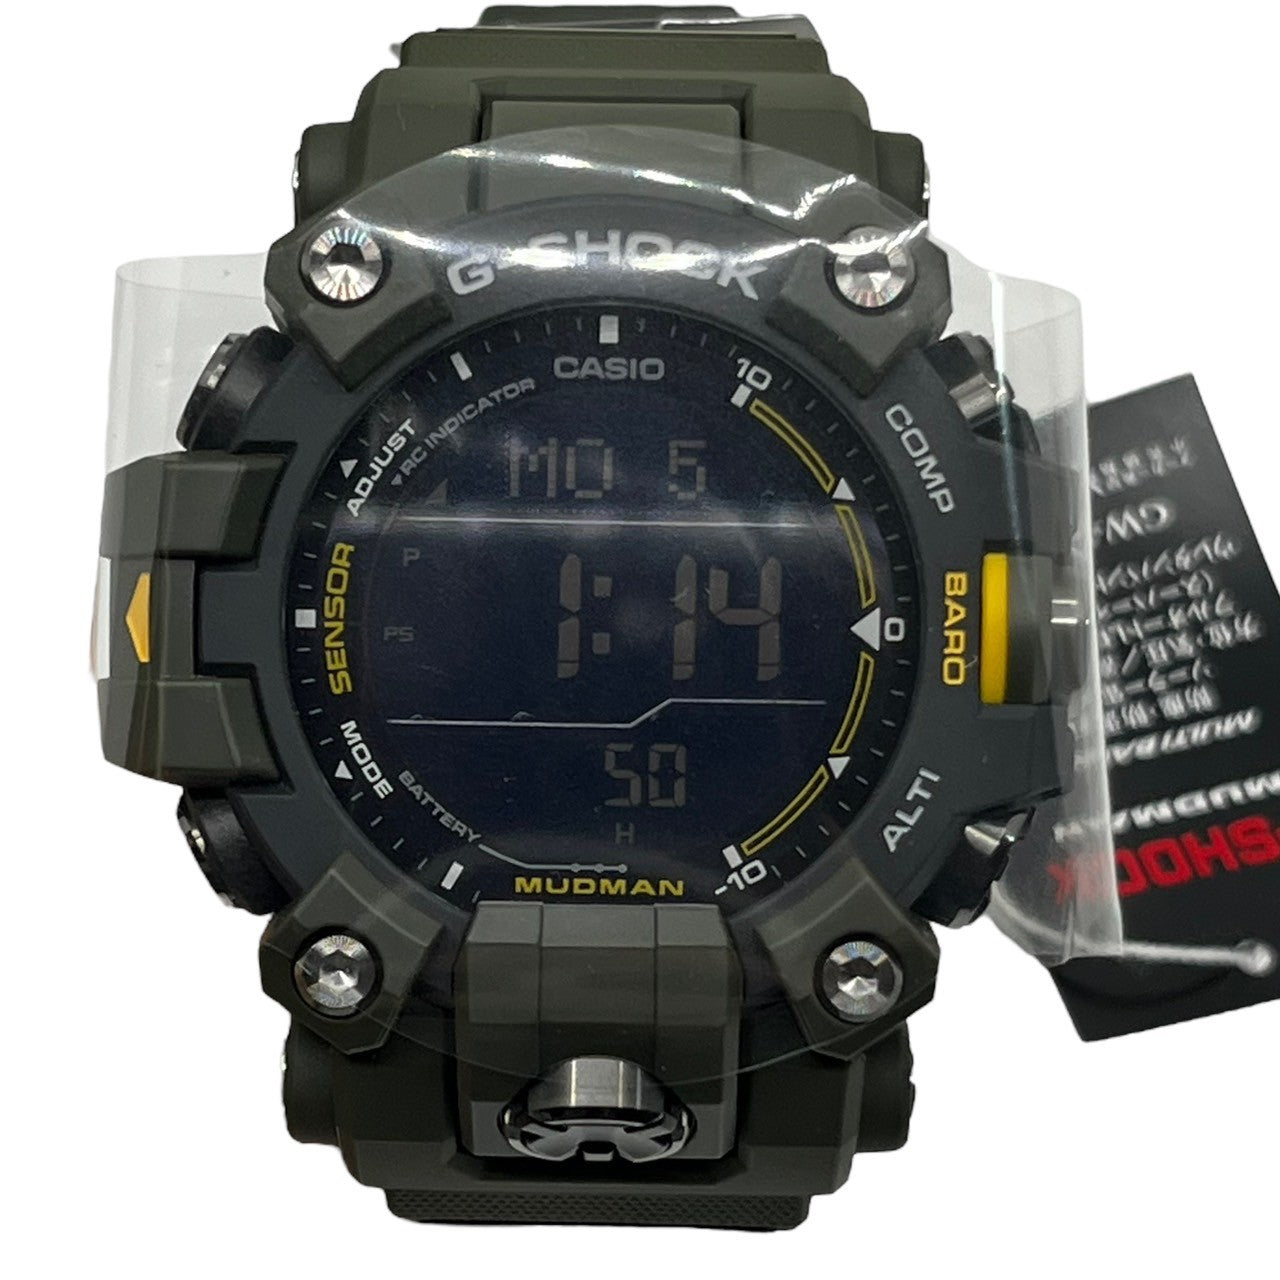 CASIO(カシオ) MASTER OF G - LAND MUDMAN G-SHOCK マッドマン 腕時計 デジタル ソーラー 電波 時計   GW-9500-3JK カーキ